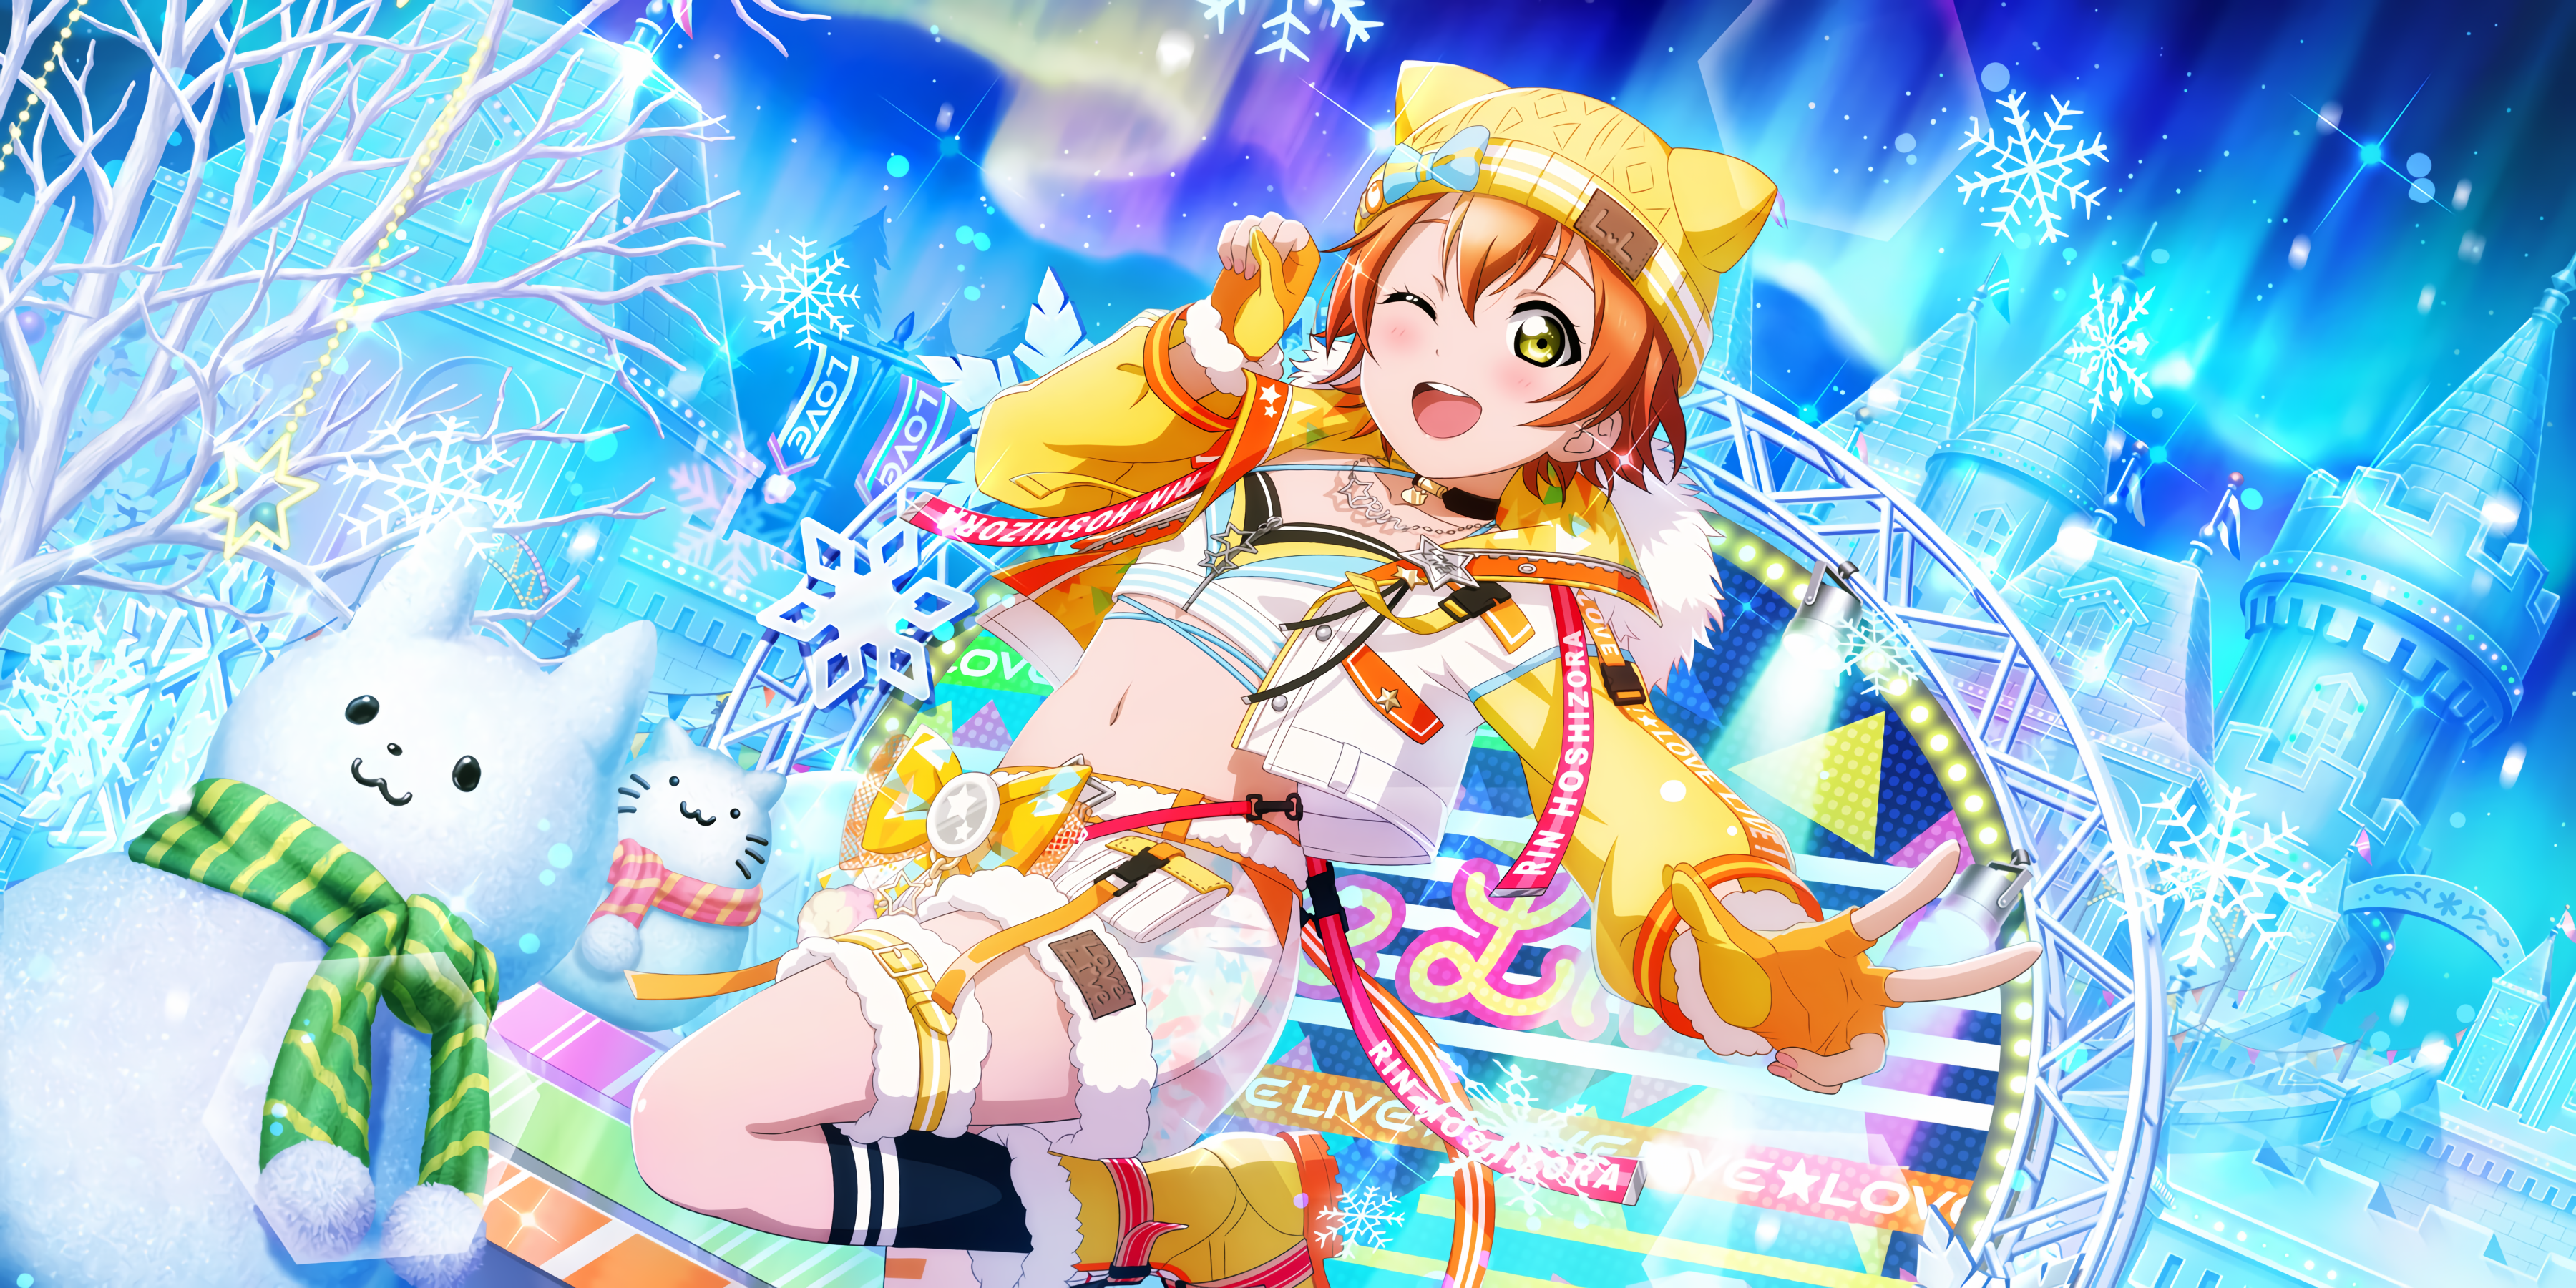 Anime 3600x1800 Hoshizora Rin Love Live! anime anime girls one eye closed hat gloves snow snowflakes scarf snowman fingerless gloves belly collar necklace aurorae